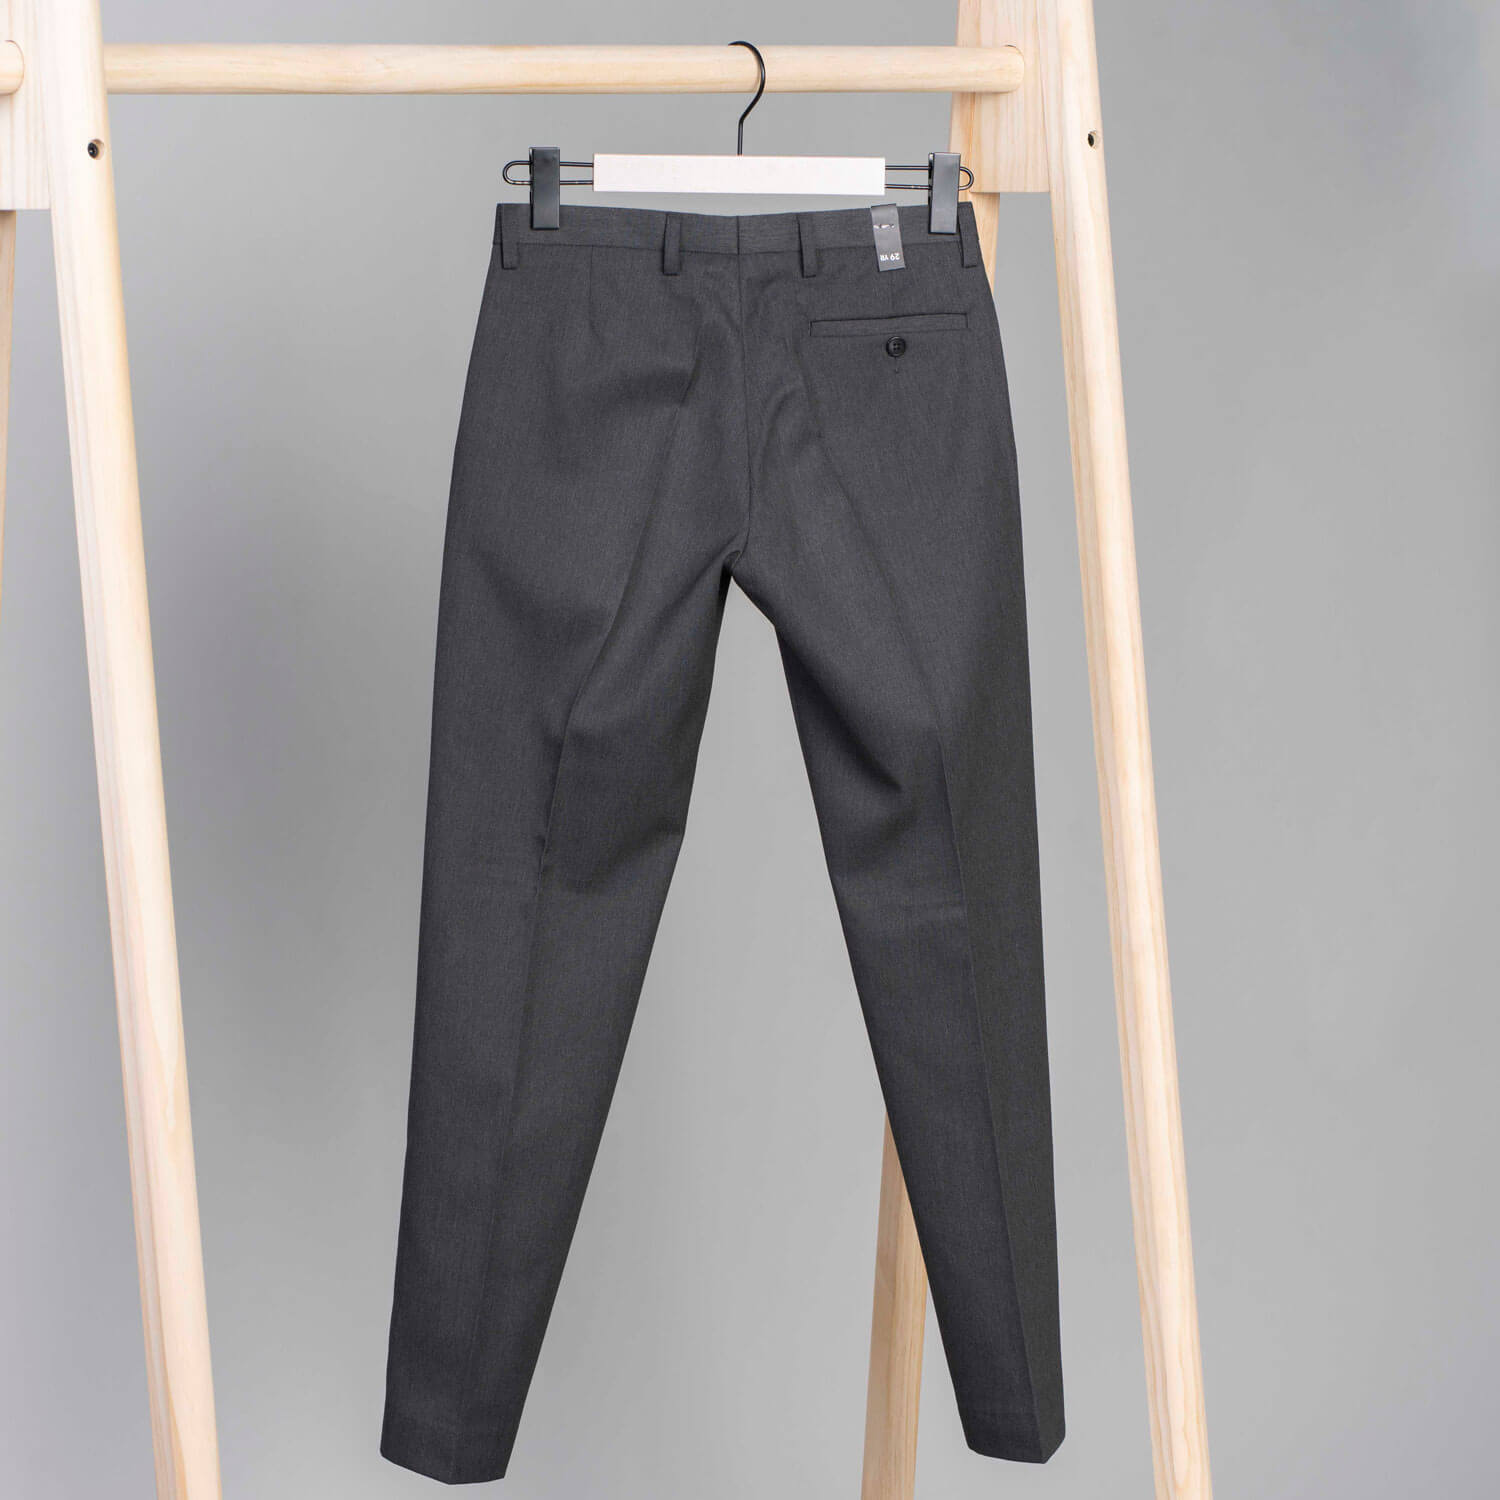 Blue Dot Elson Senior Boys Trousers - Grey 2 Shaws Department Stores